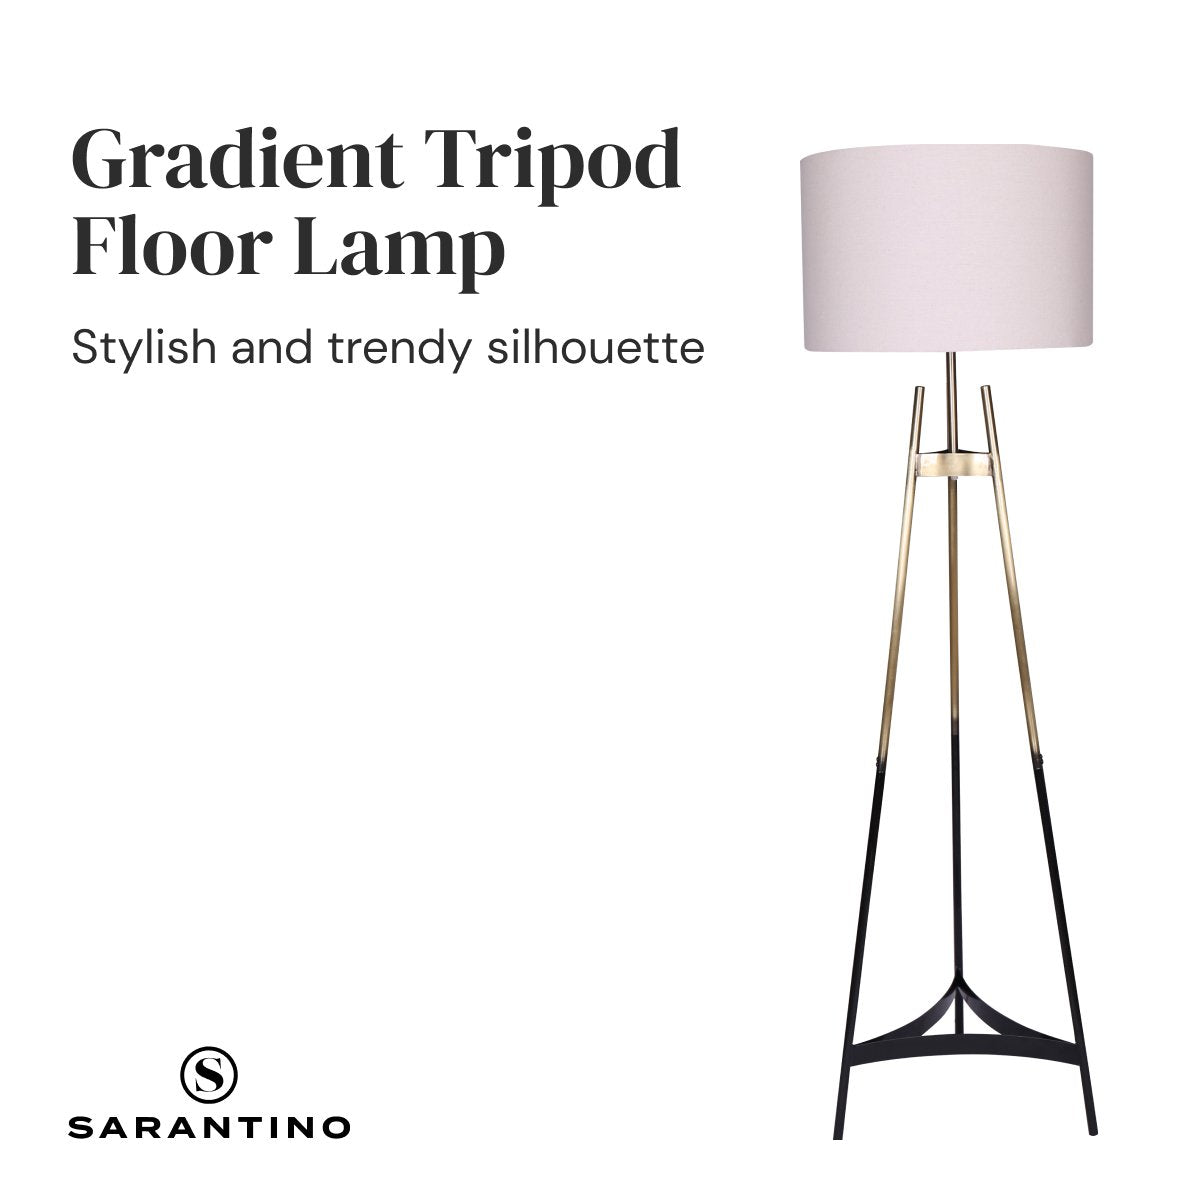 Gradient Tripod Floor Lamp